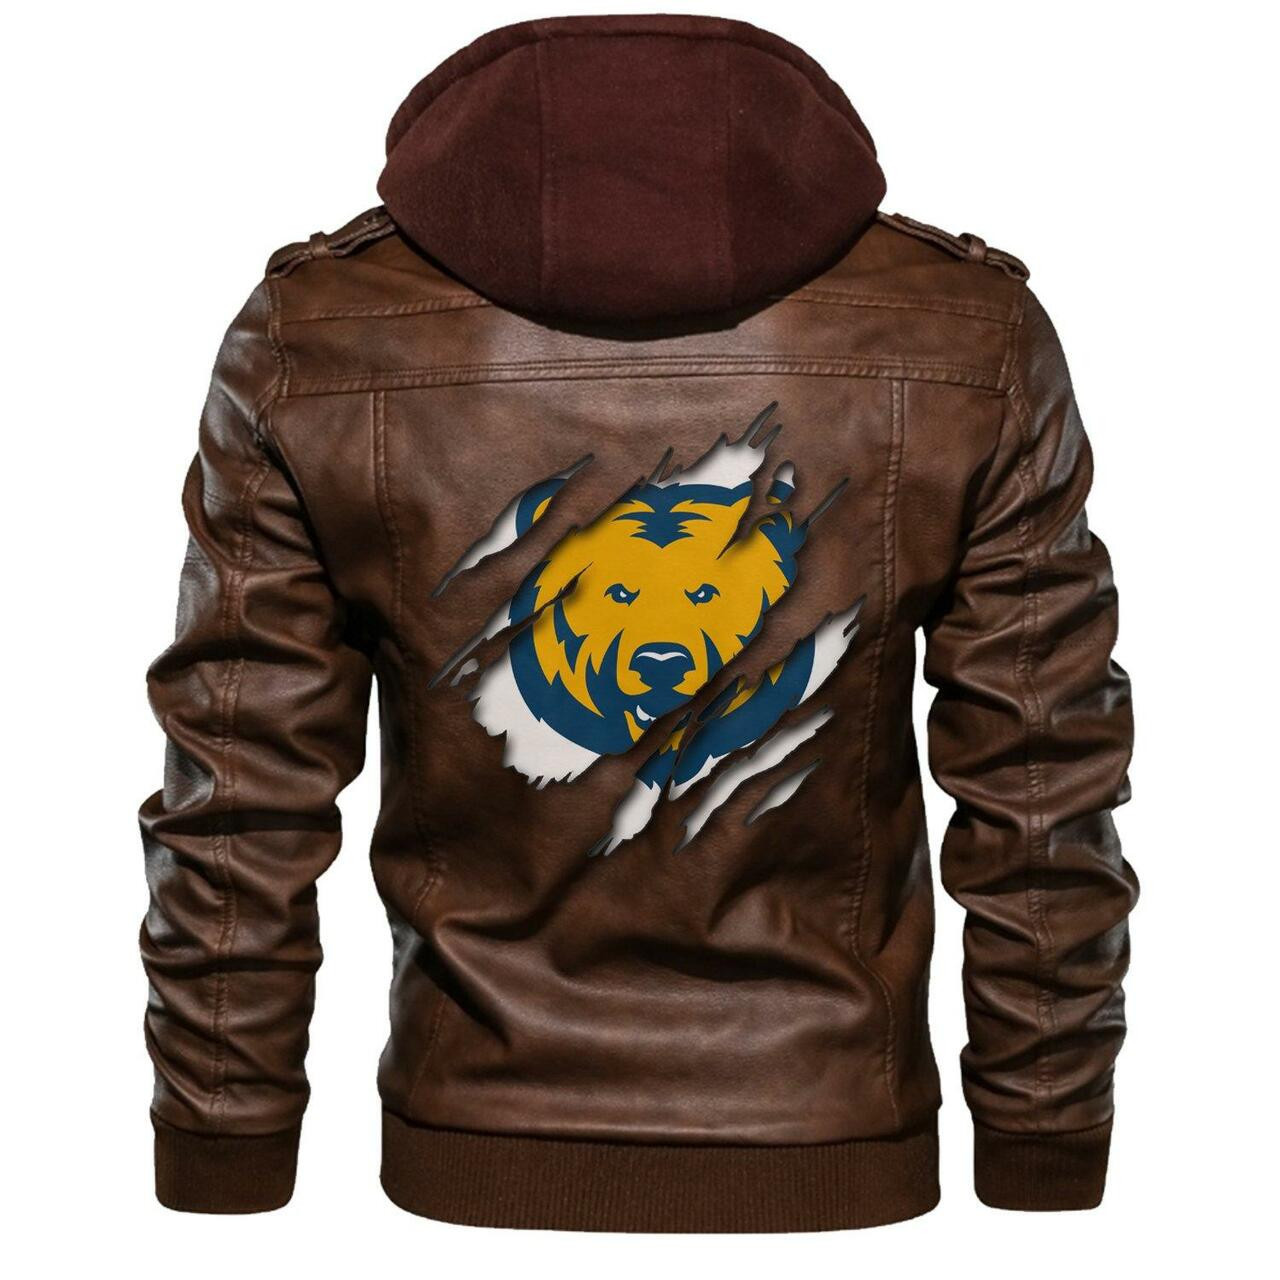 Top leather jacket Sells Best on Techcomshop 95